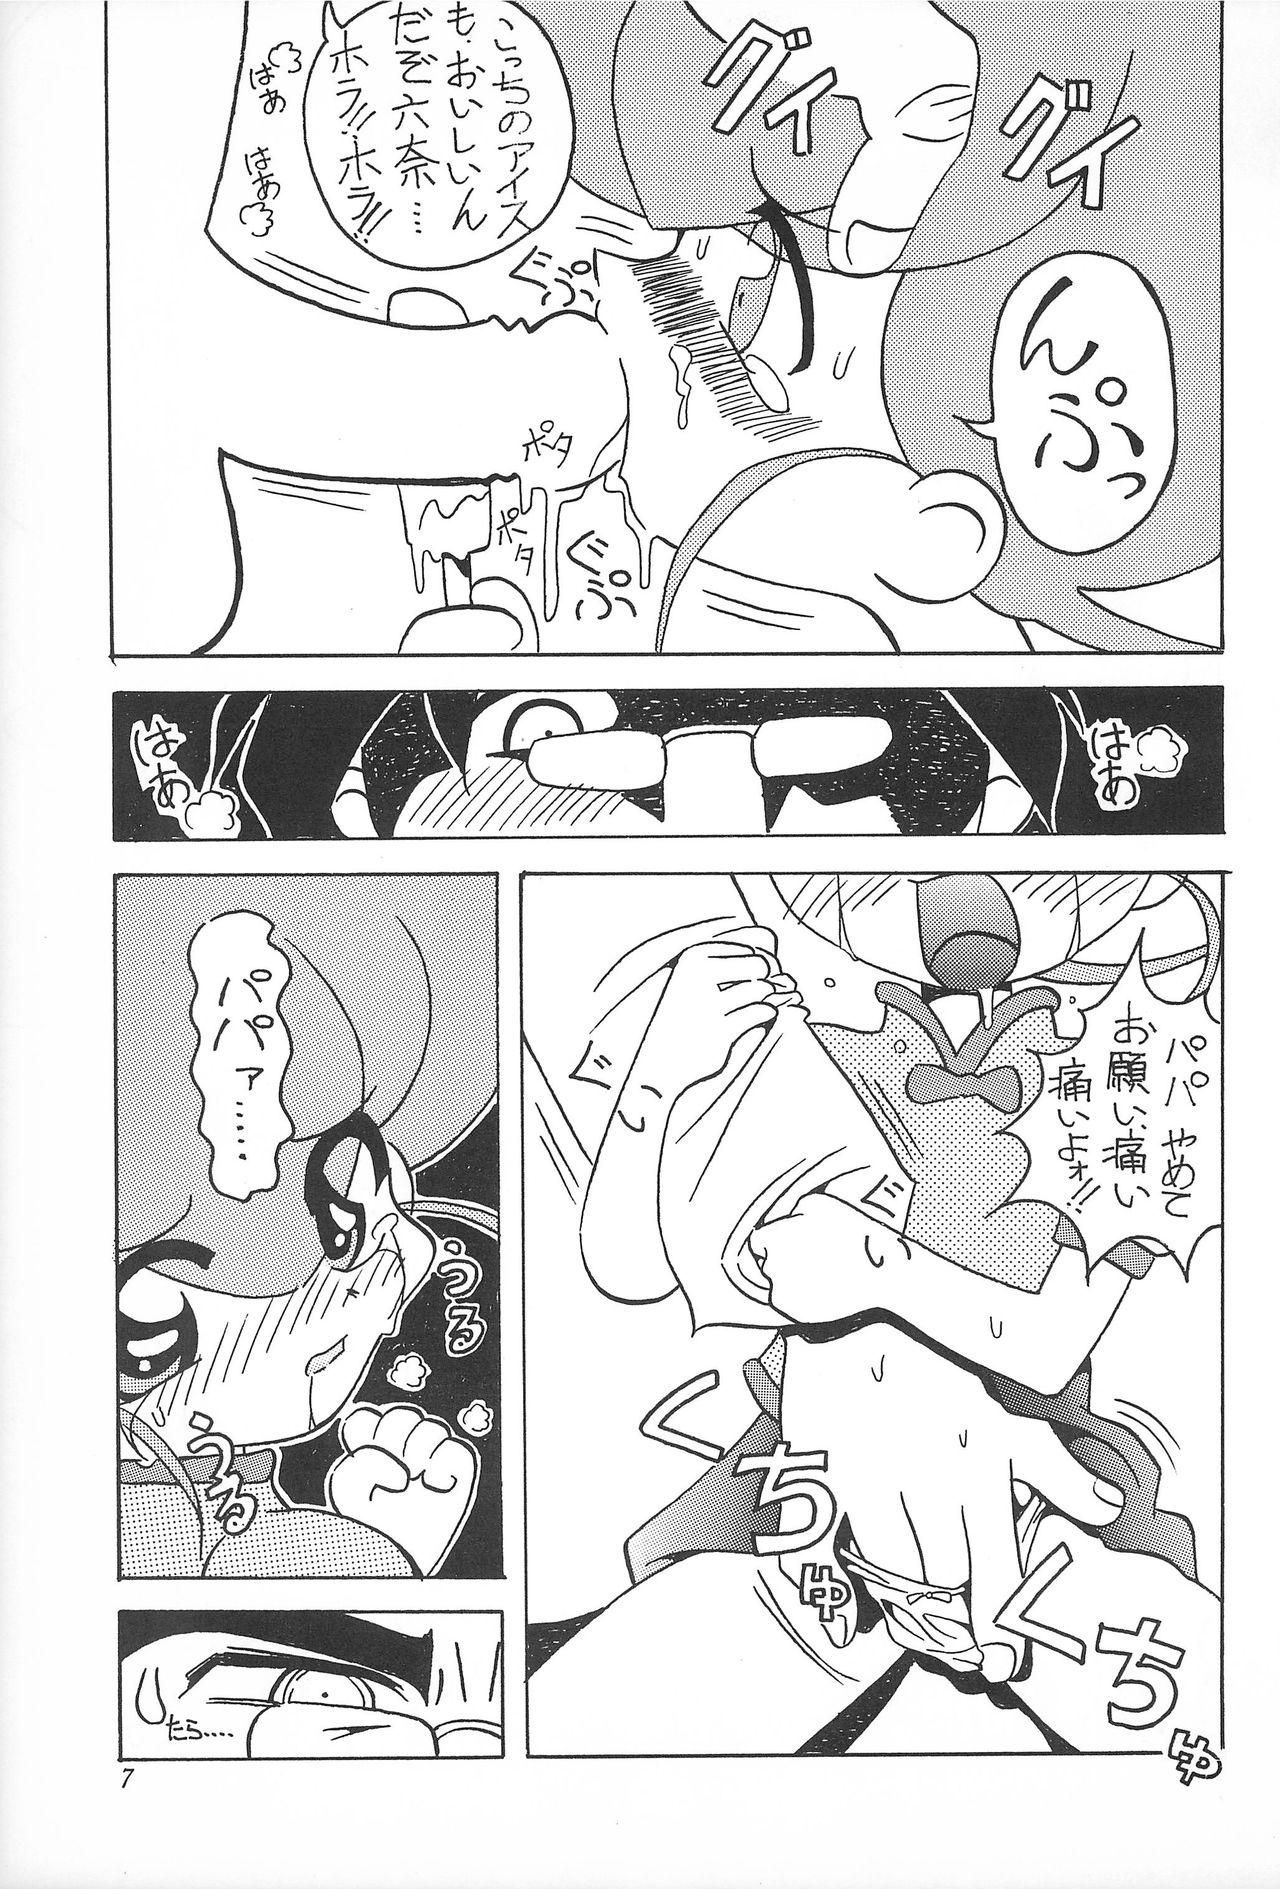 Family Sex Rokushin Gattai - Magewappa 13 - Mon colle knights Ametur Porn - Page 8